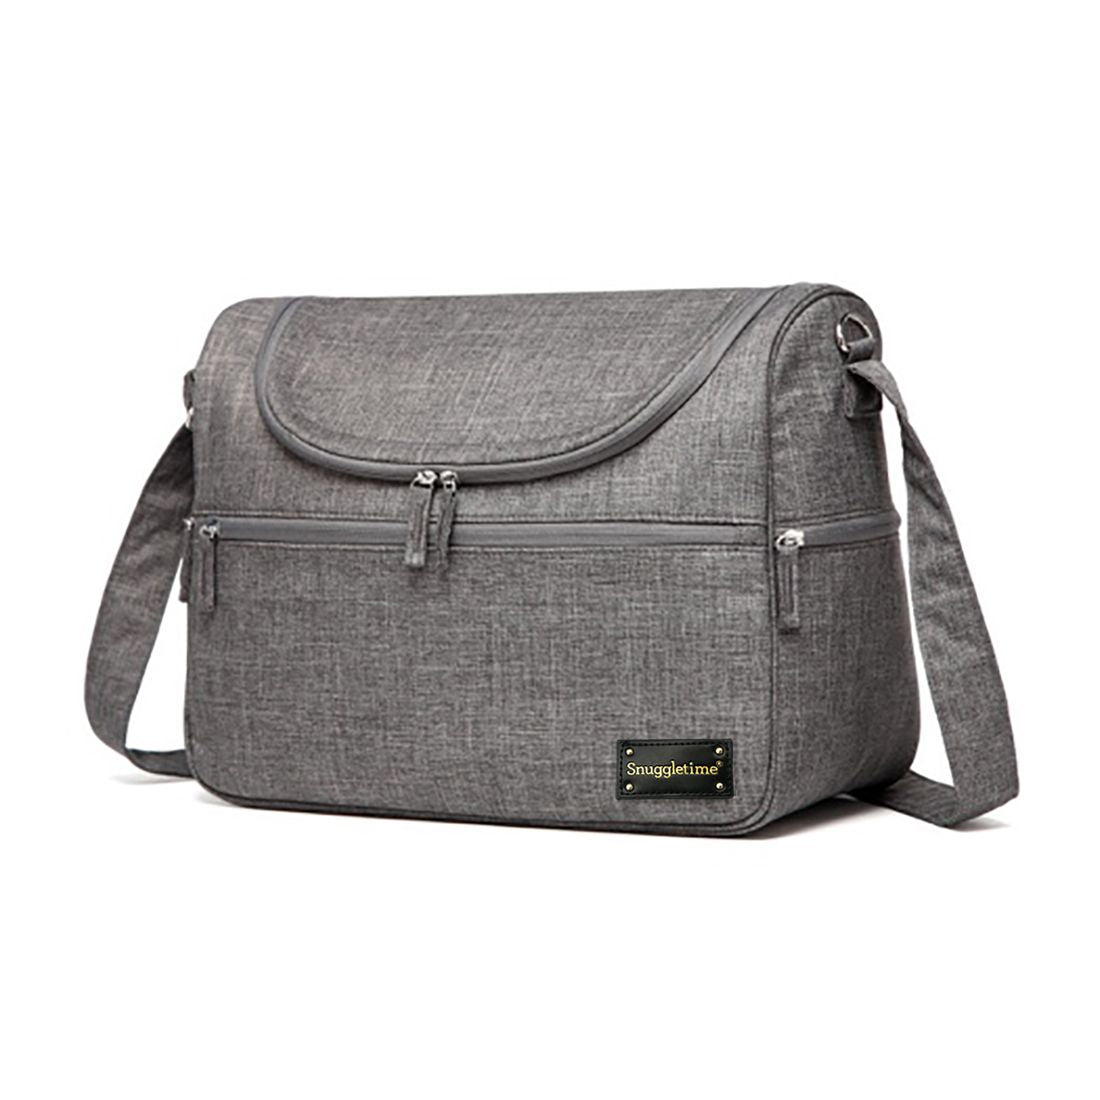 Nappy Bag - Classic Grey Travel Bag